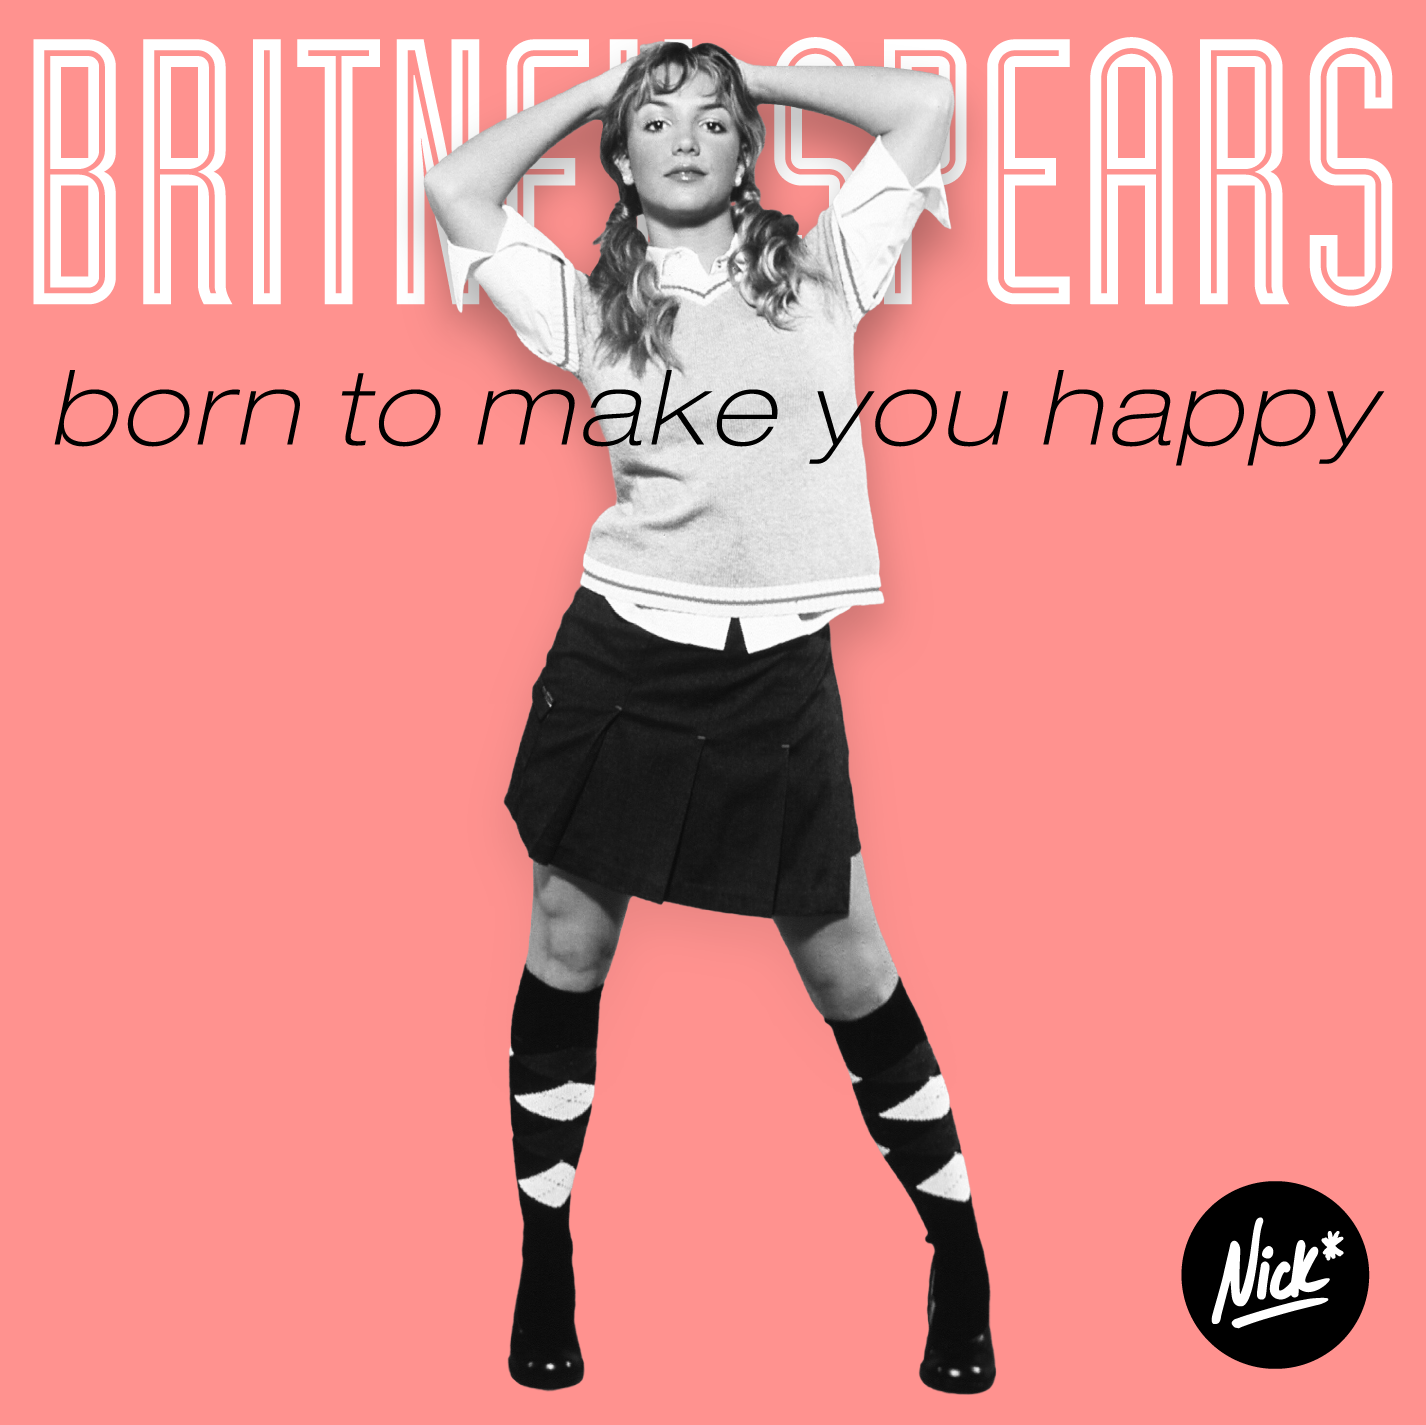 Britney Spears - Born To Make You Happy Nick* Super Pop Remix